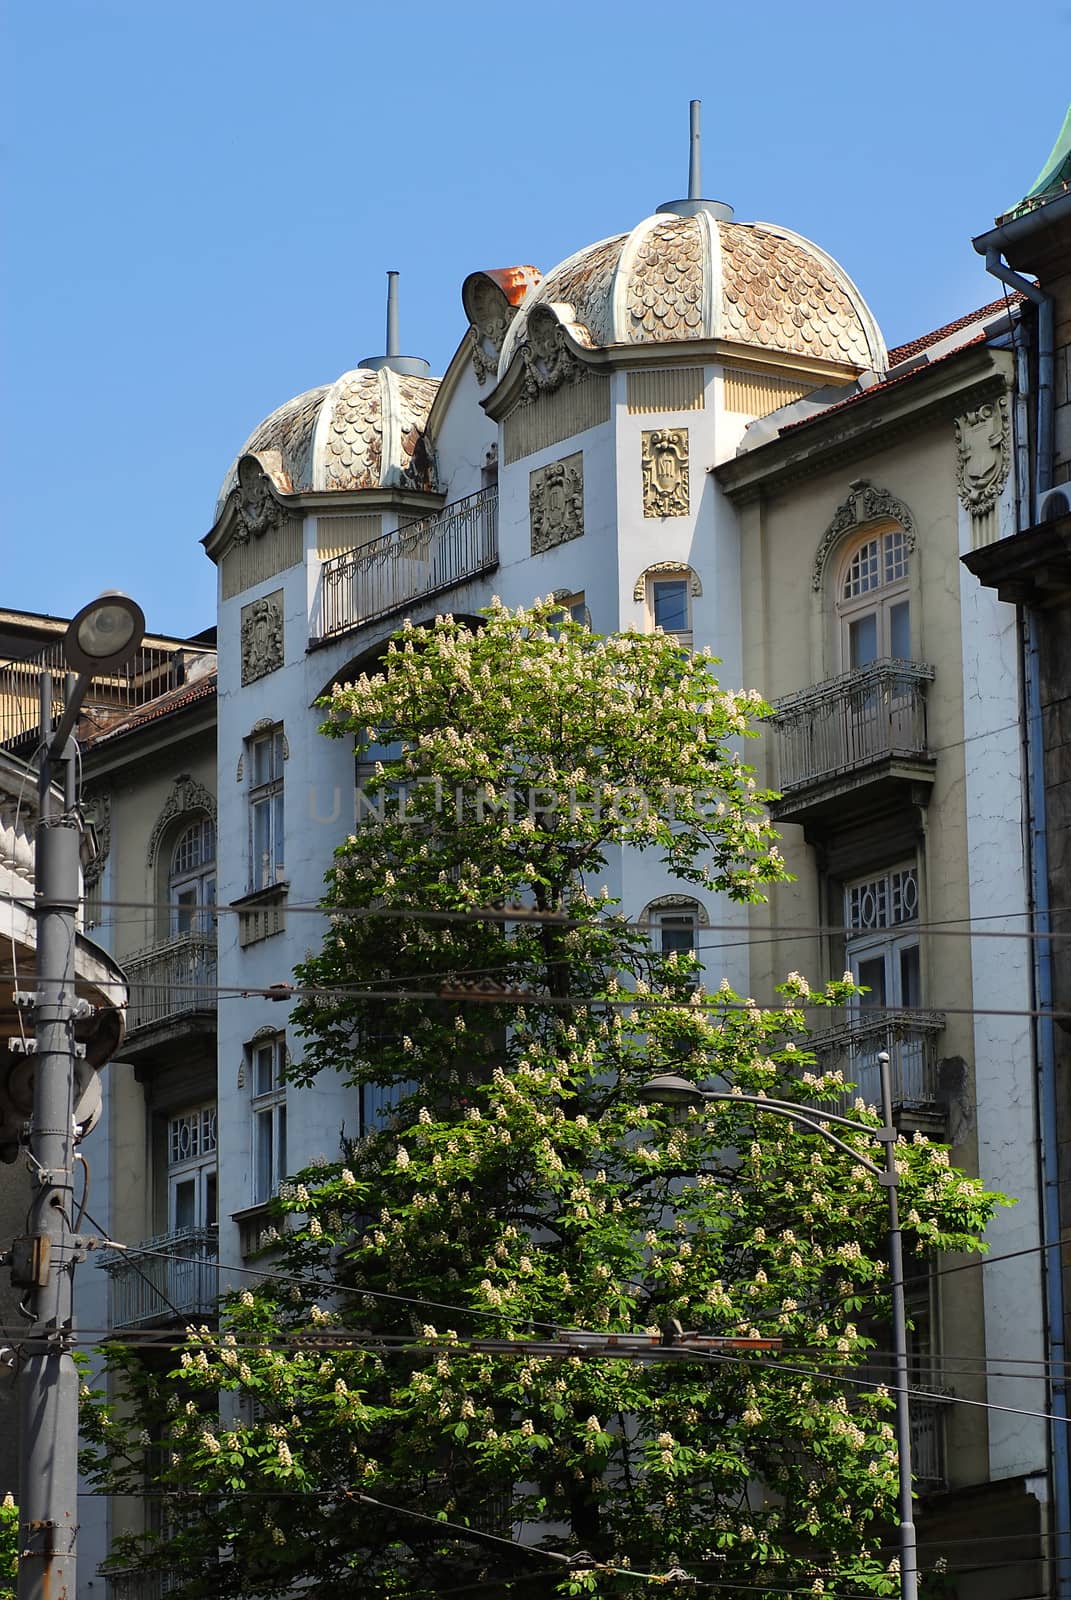 building exterior details in the center of Belgrade